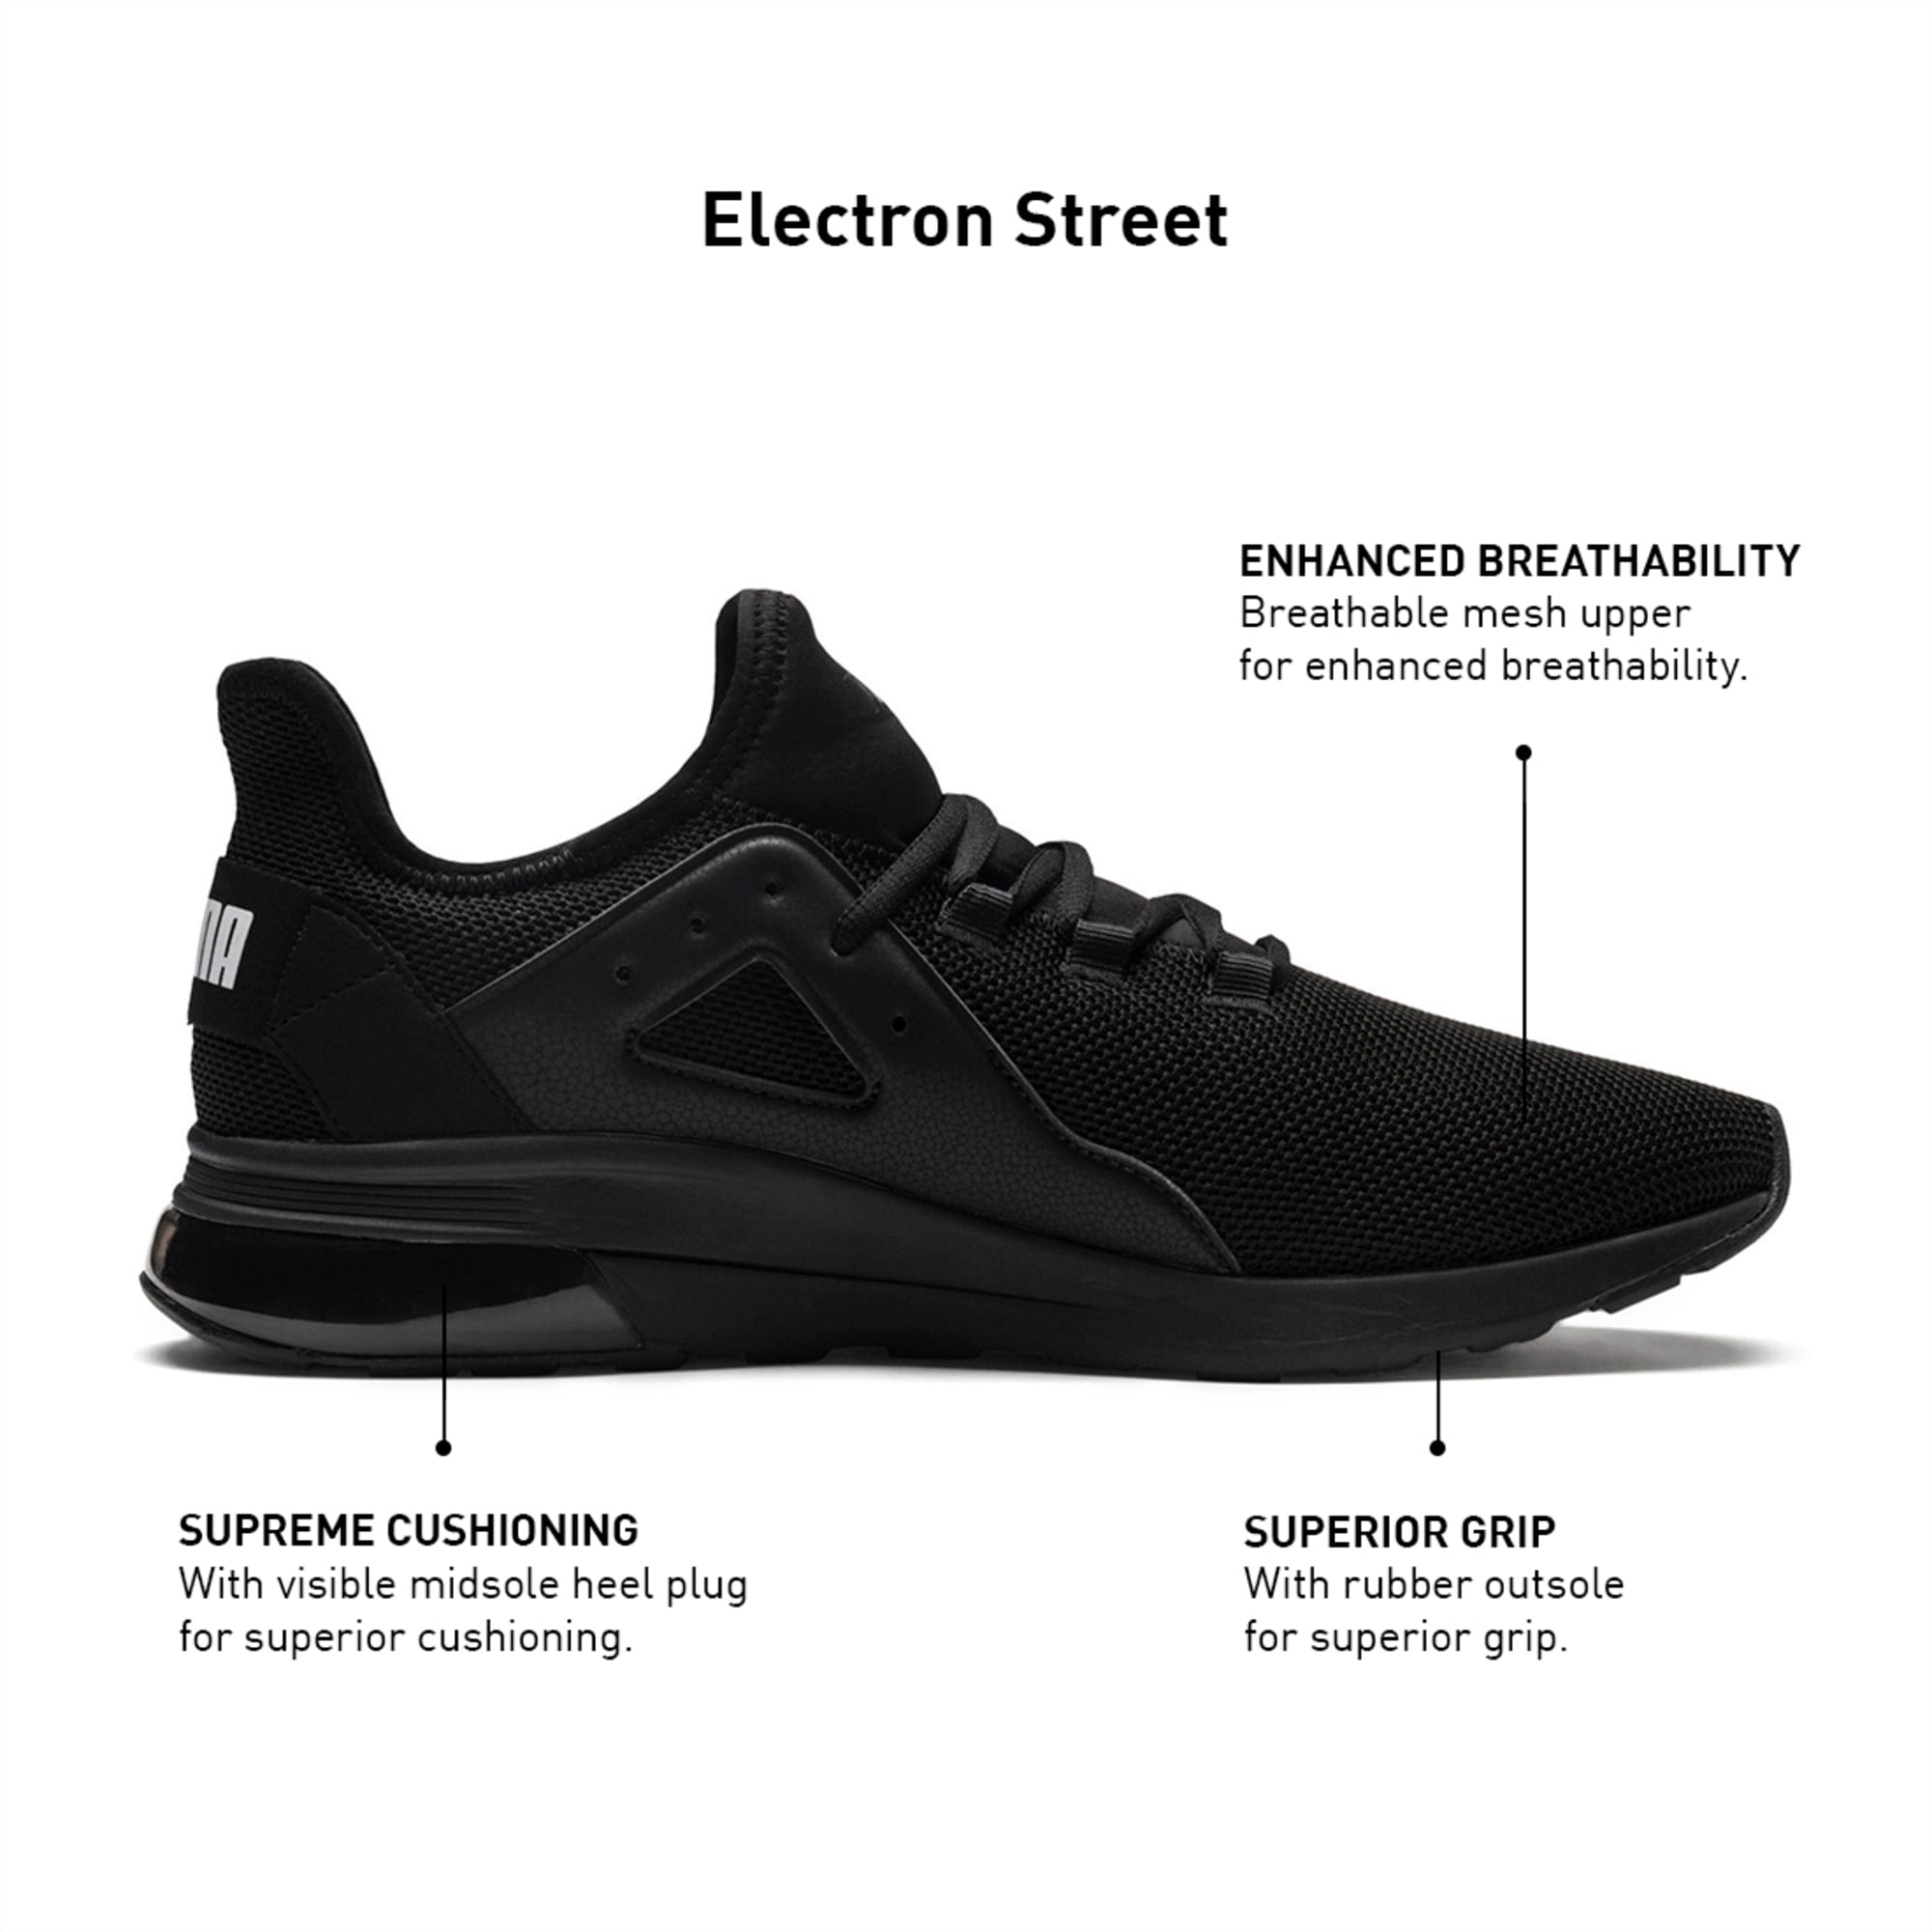 electron street sneakers